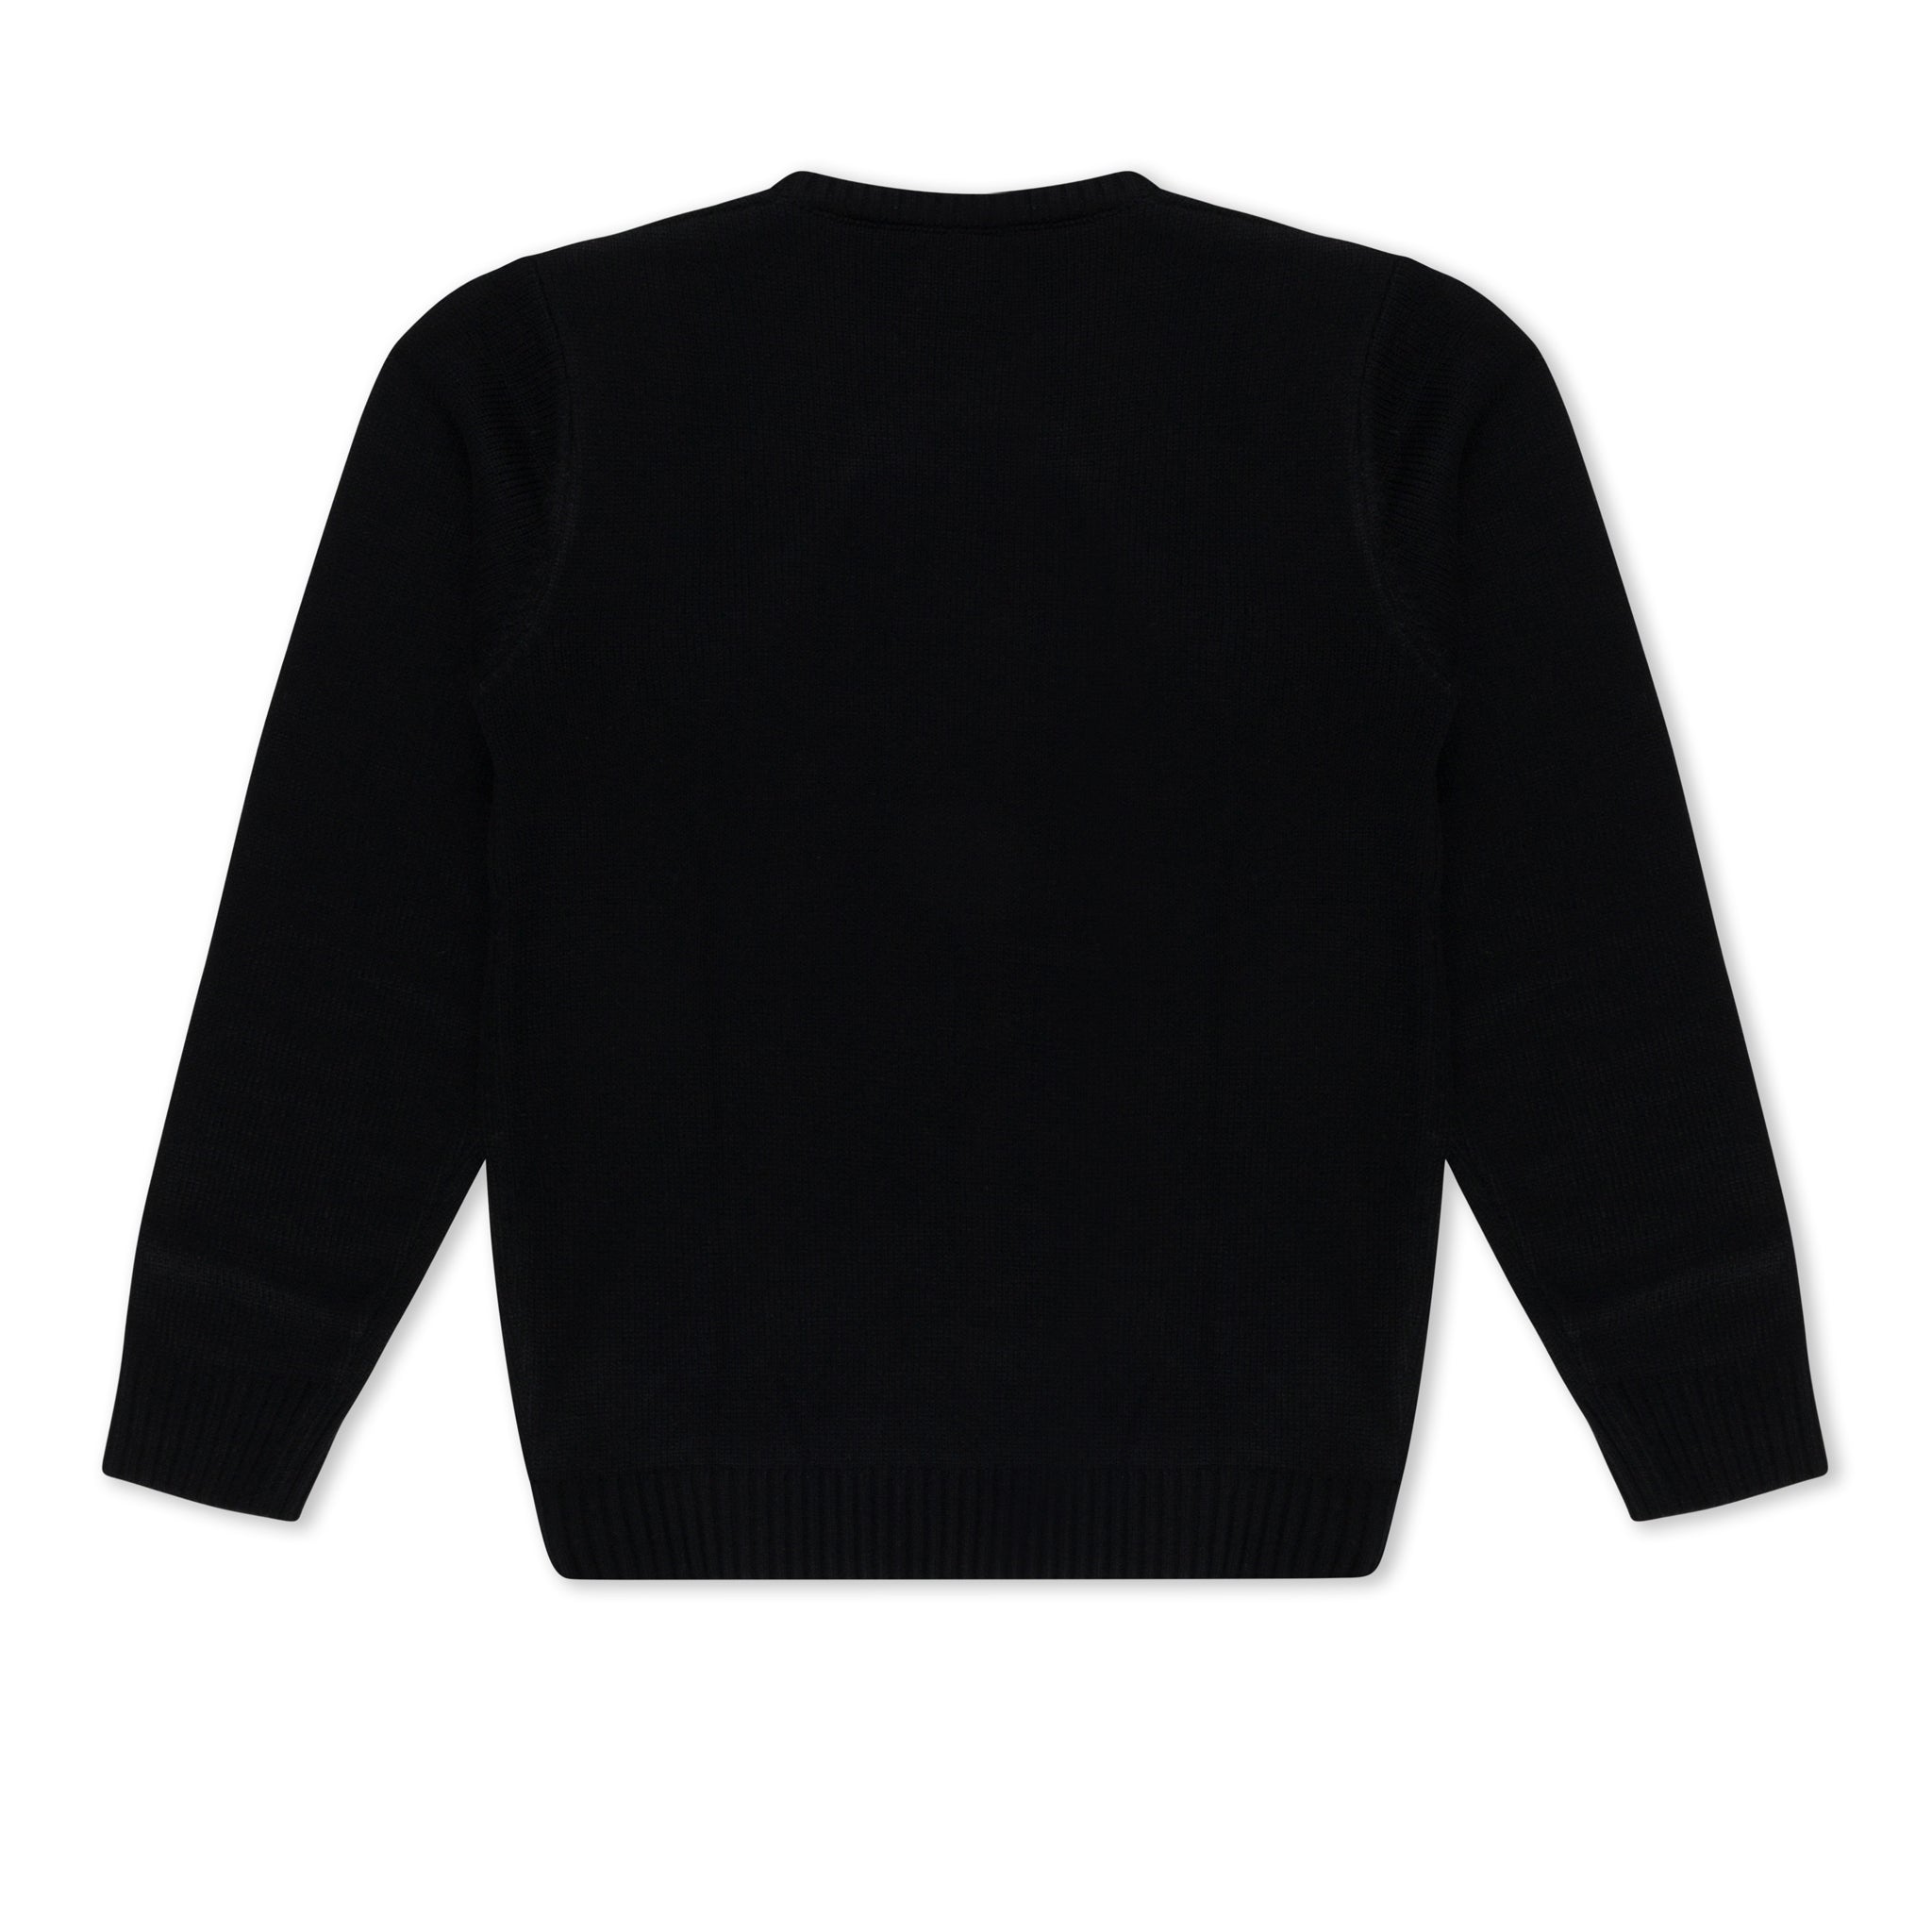 RIPNDIP Electrifying Santa Knit Sweater (Black)